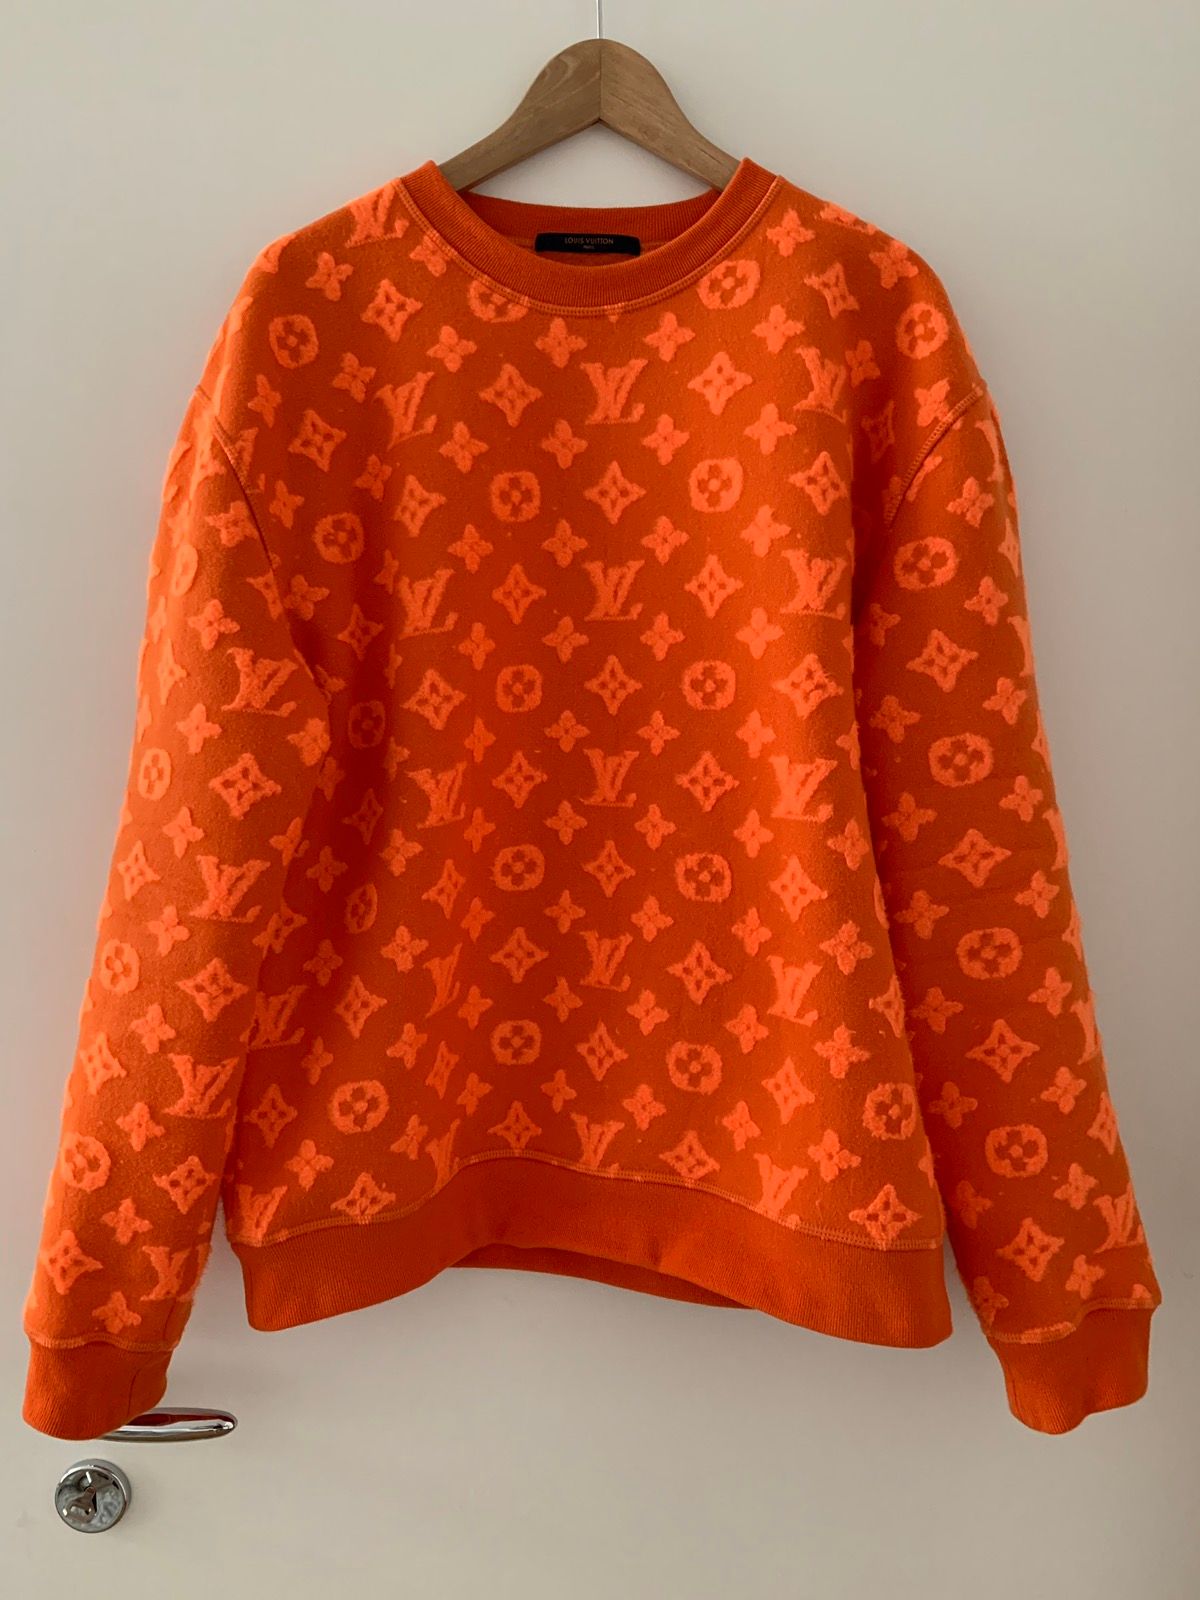 Louis Vuitton LV Orange Monogram Sweater Pre Fall 19 Size US M / EU 48-50 / 2 - 1 Preview